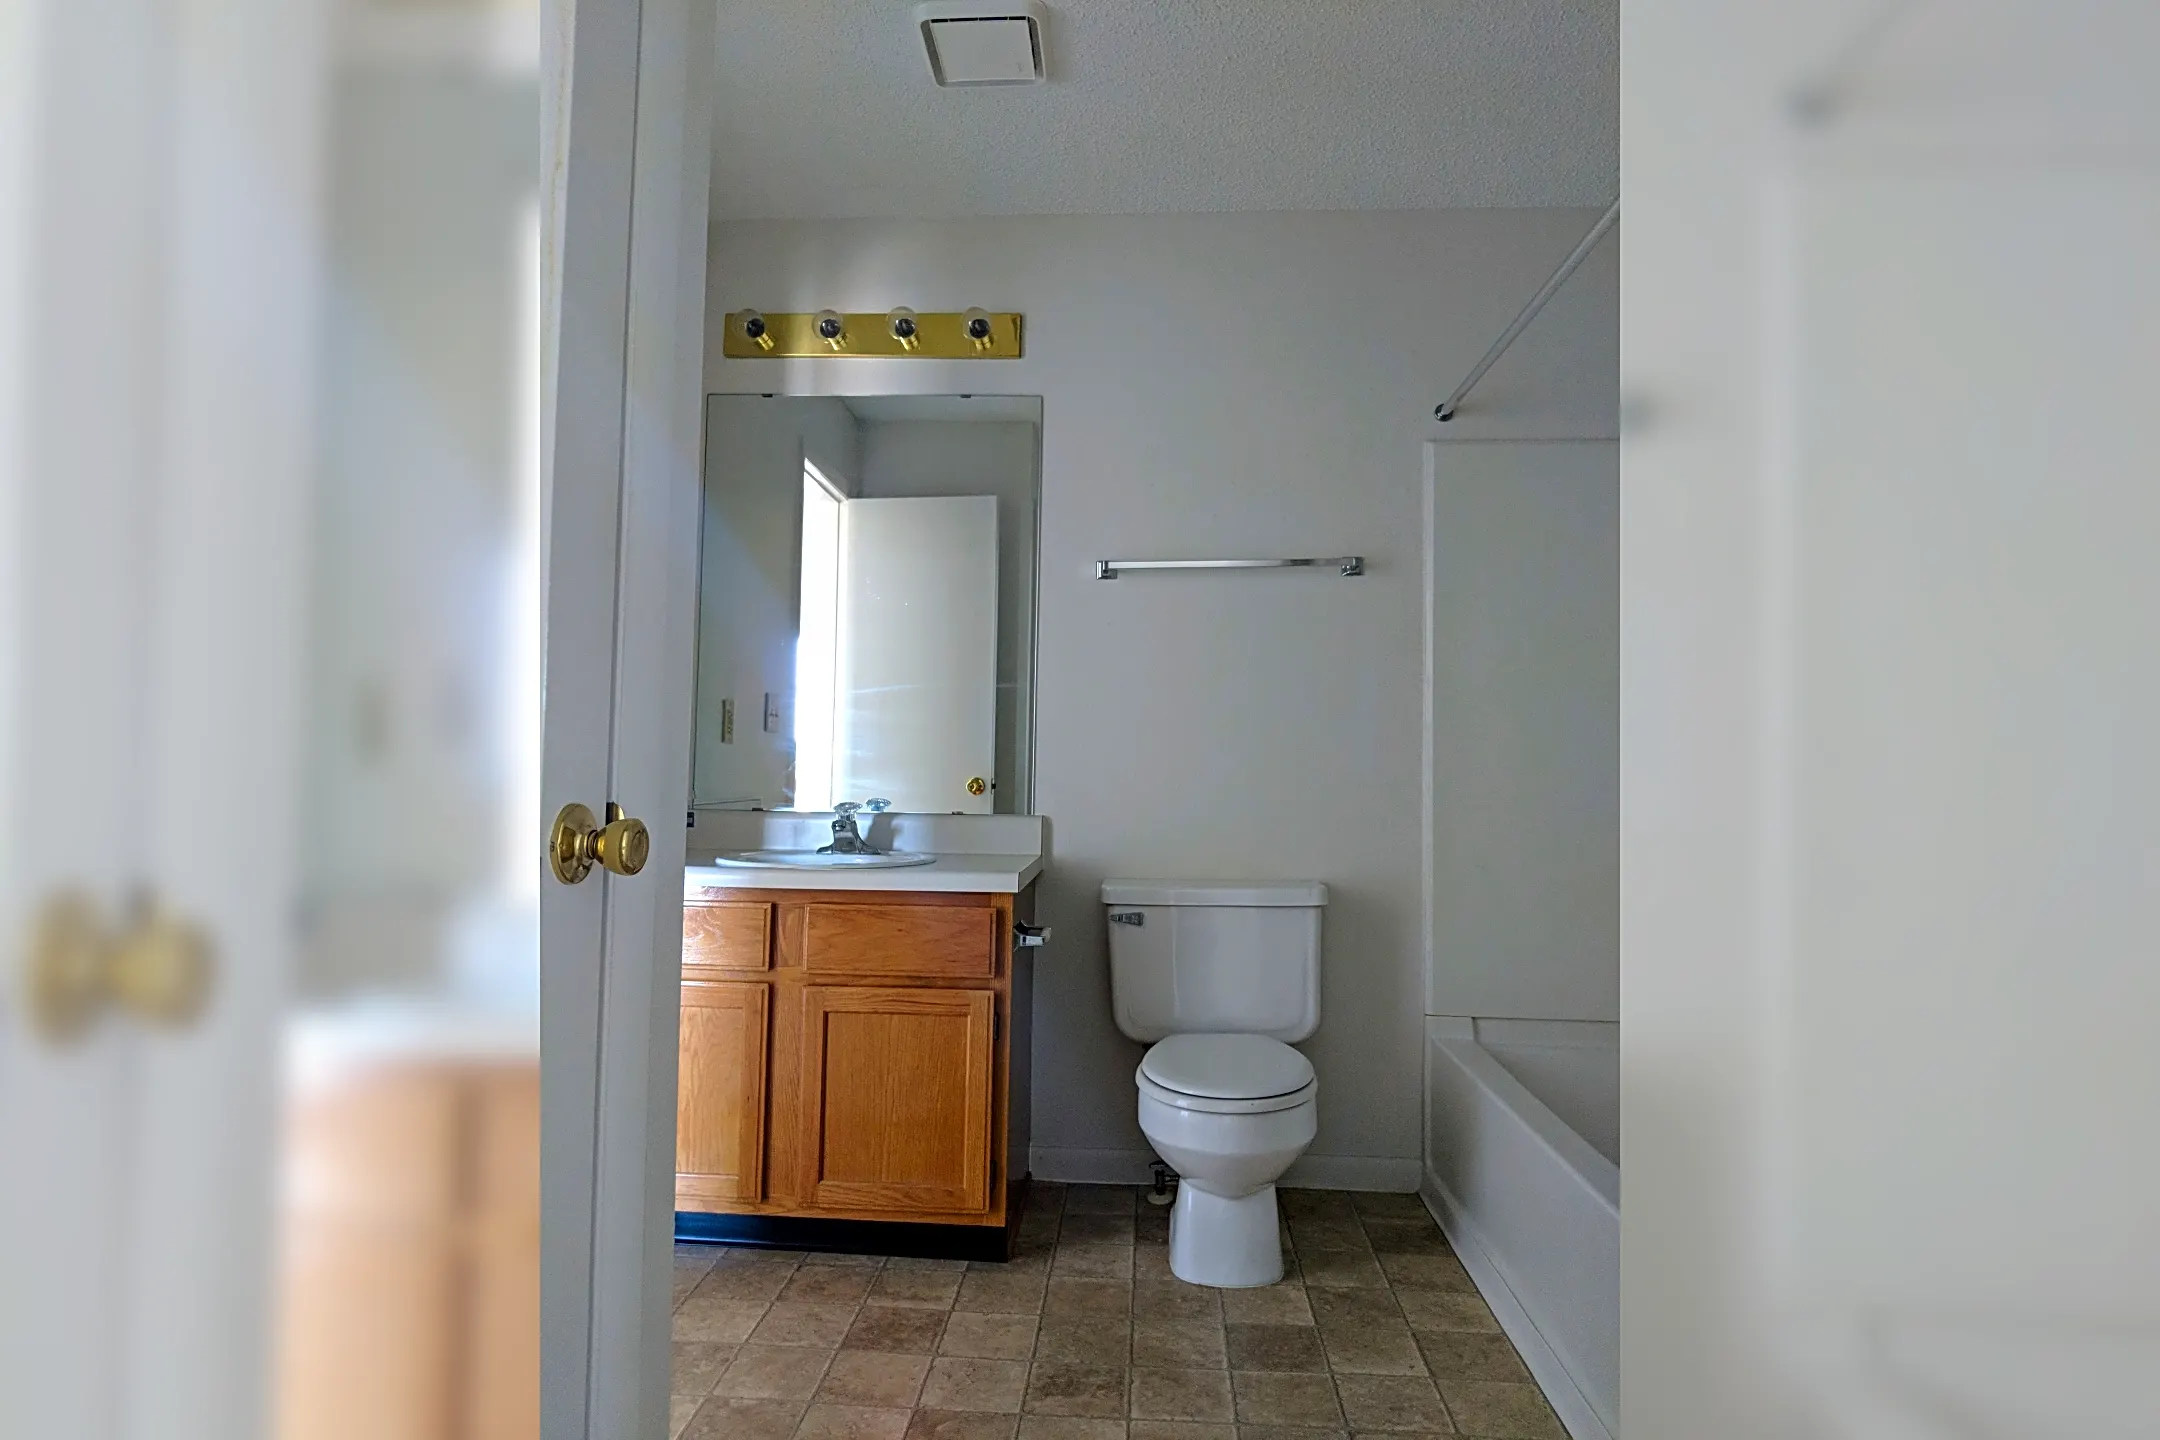 Bathroom - Union Hill Apartments - Dayton, OH